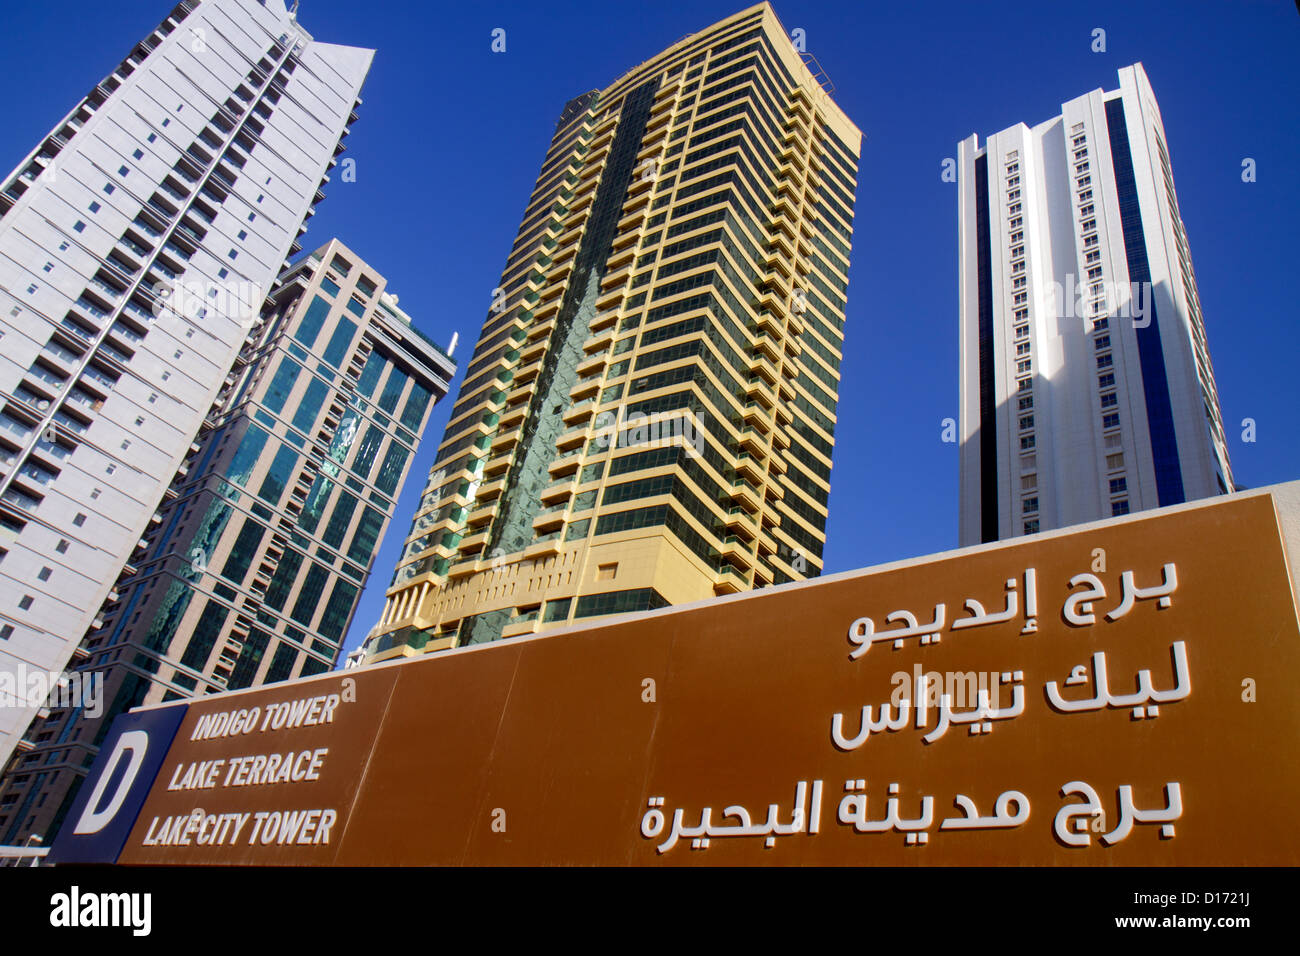 Dubai UAE,Emirati Arabi Uniti,Jumeirah Lake Towers,Lake City Tower,Global Lake View,Lake Terrace,al Shera Tower,edificio,grattacielo alto Foto Stock